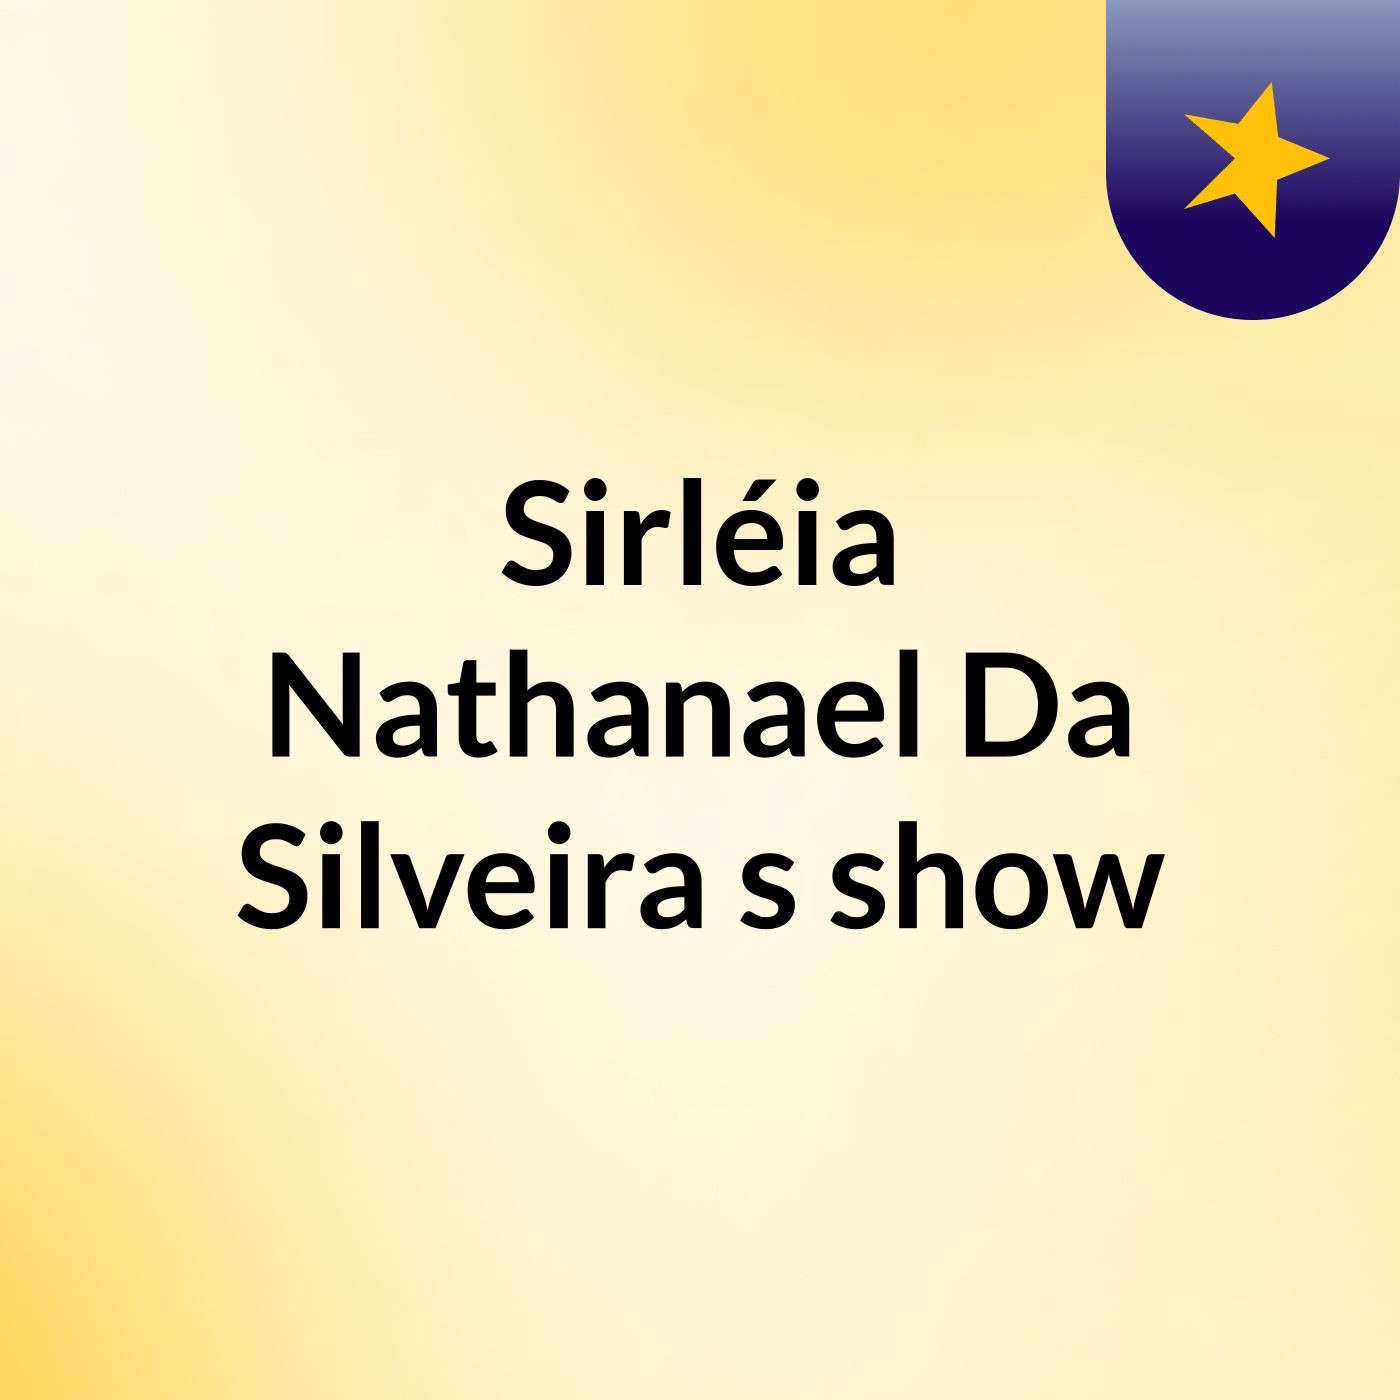 Sirléia Nathanael Da Silveira's show